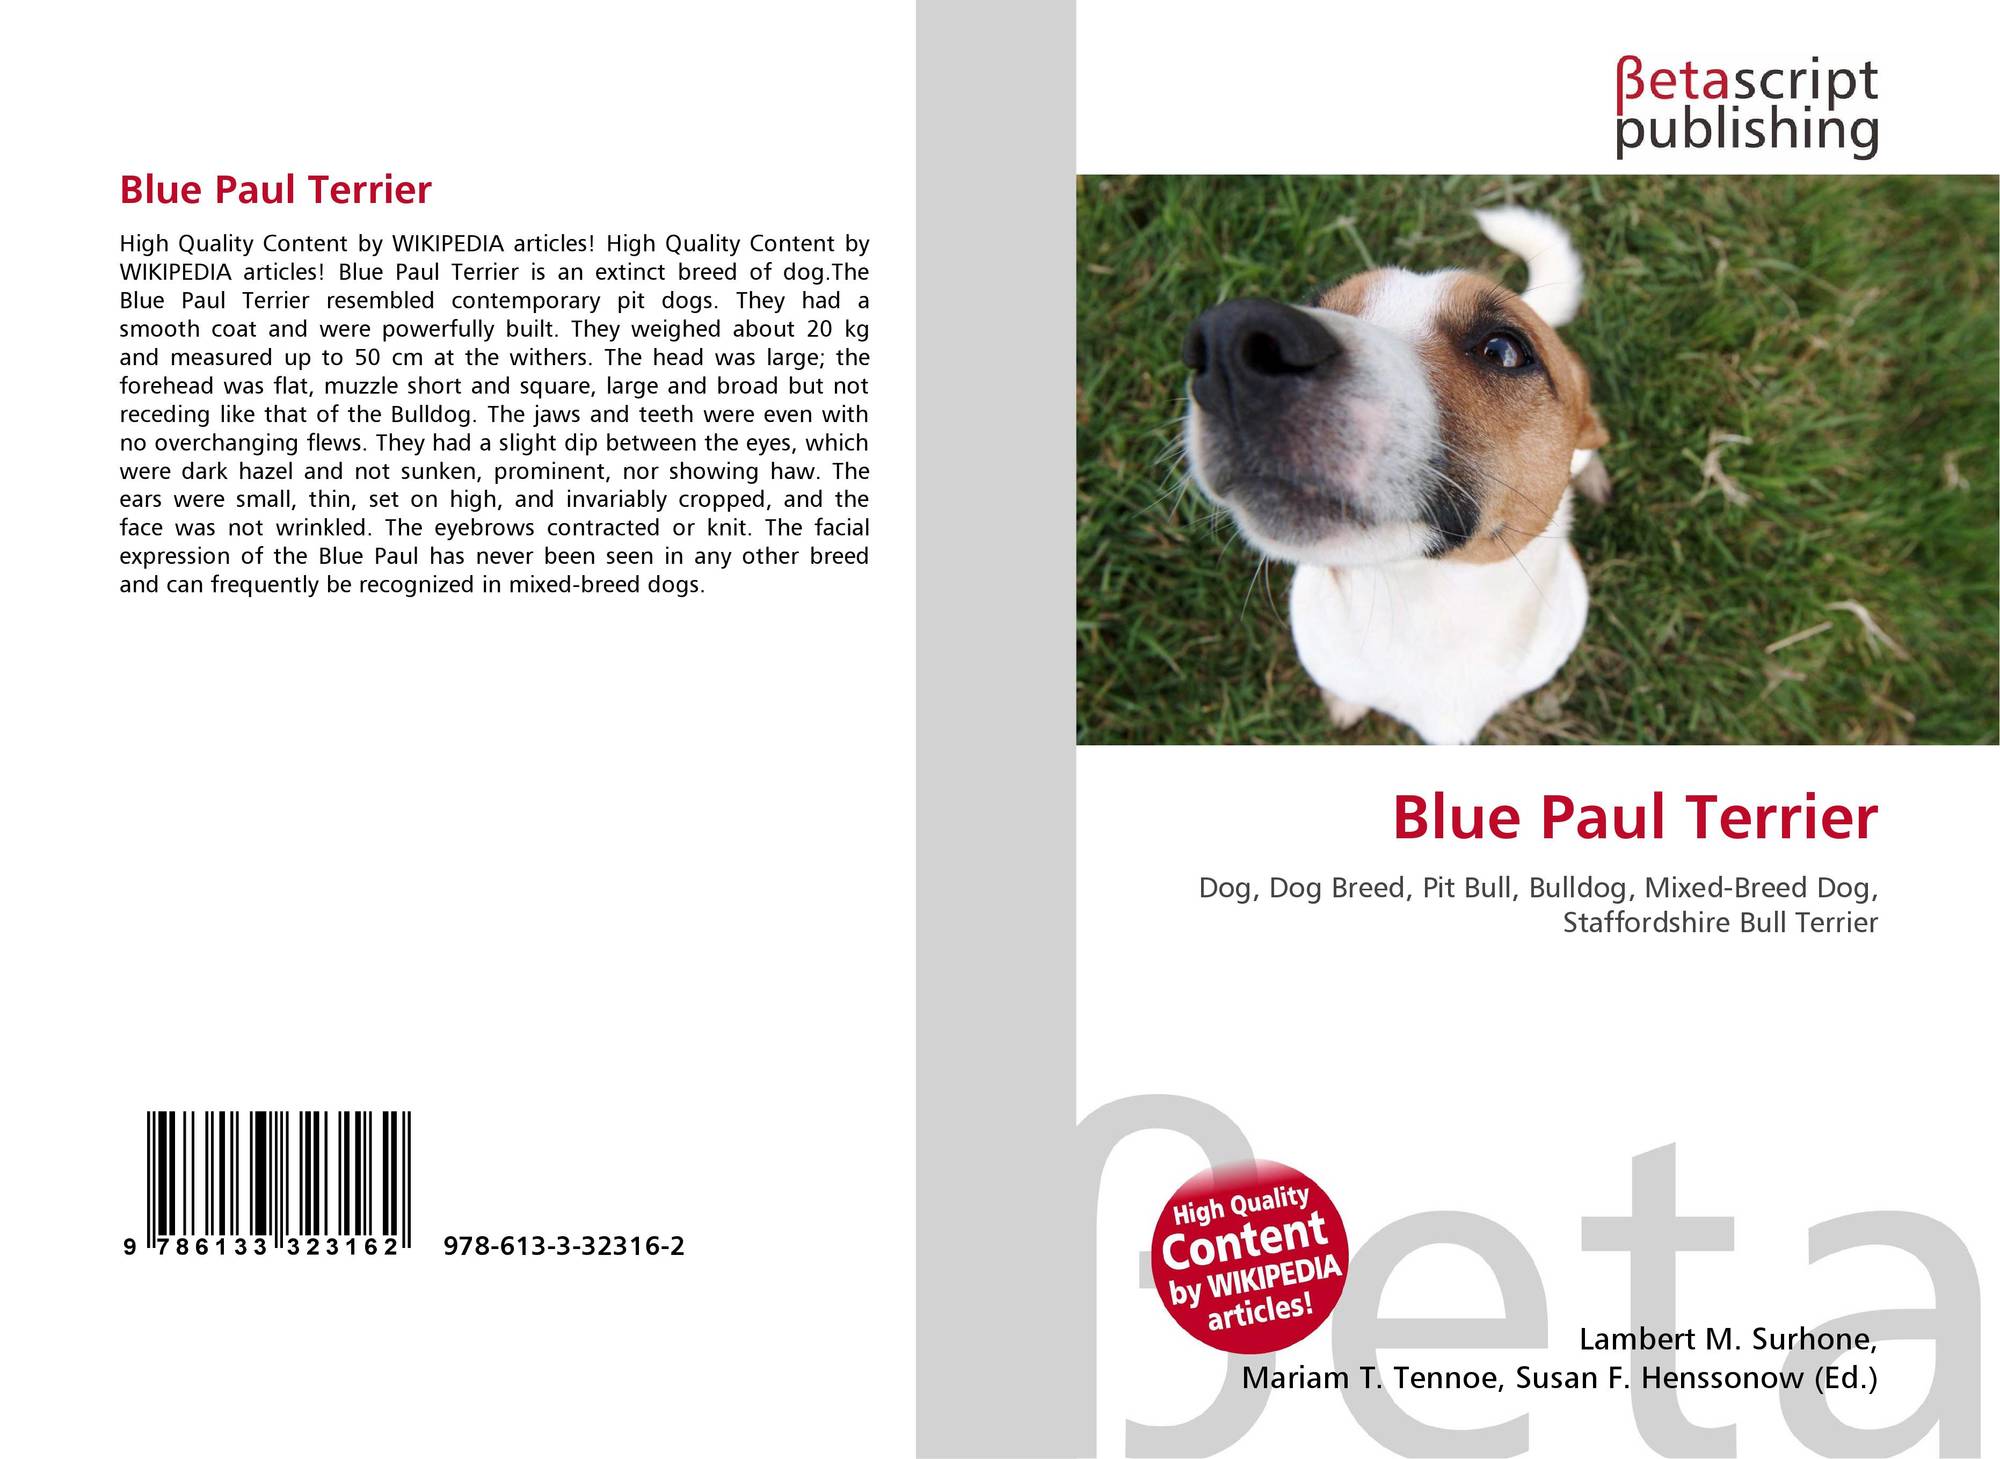 Blue Paul Terrier 978 613 3 32316 2 6133323167 9786133323162